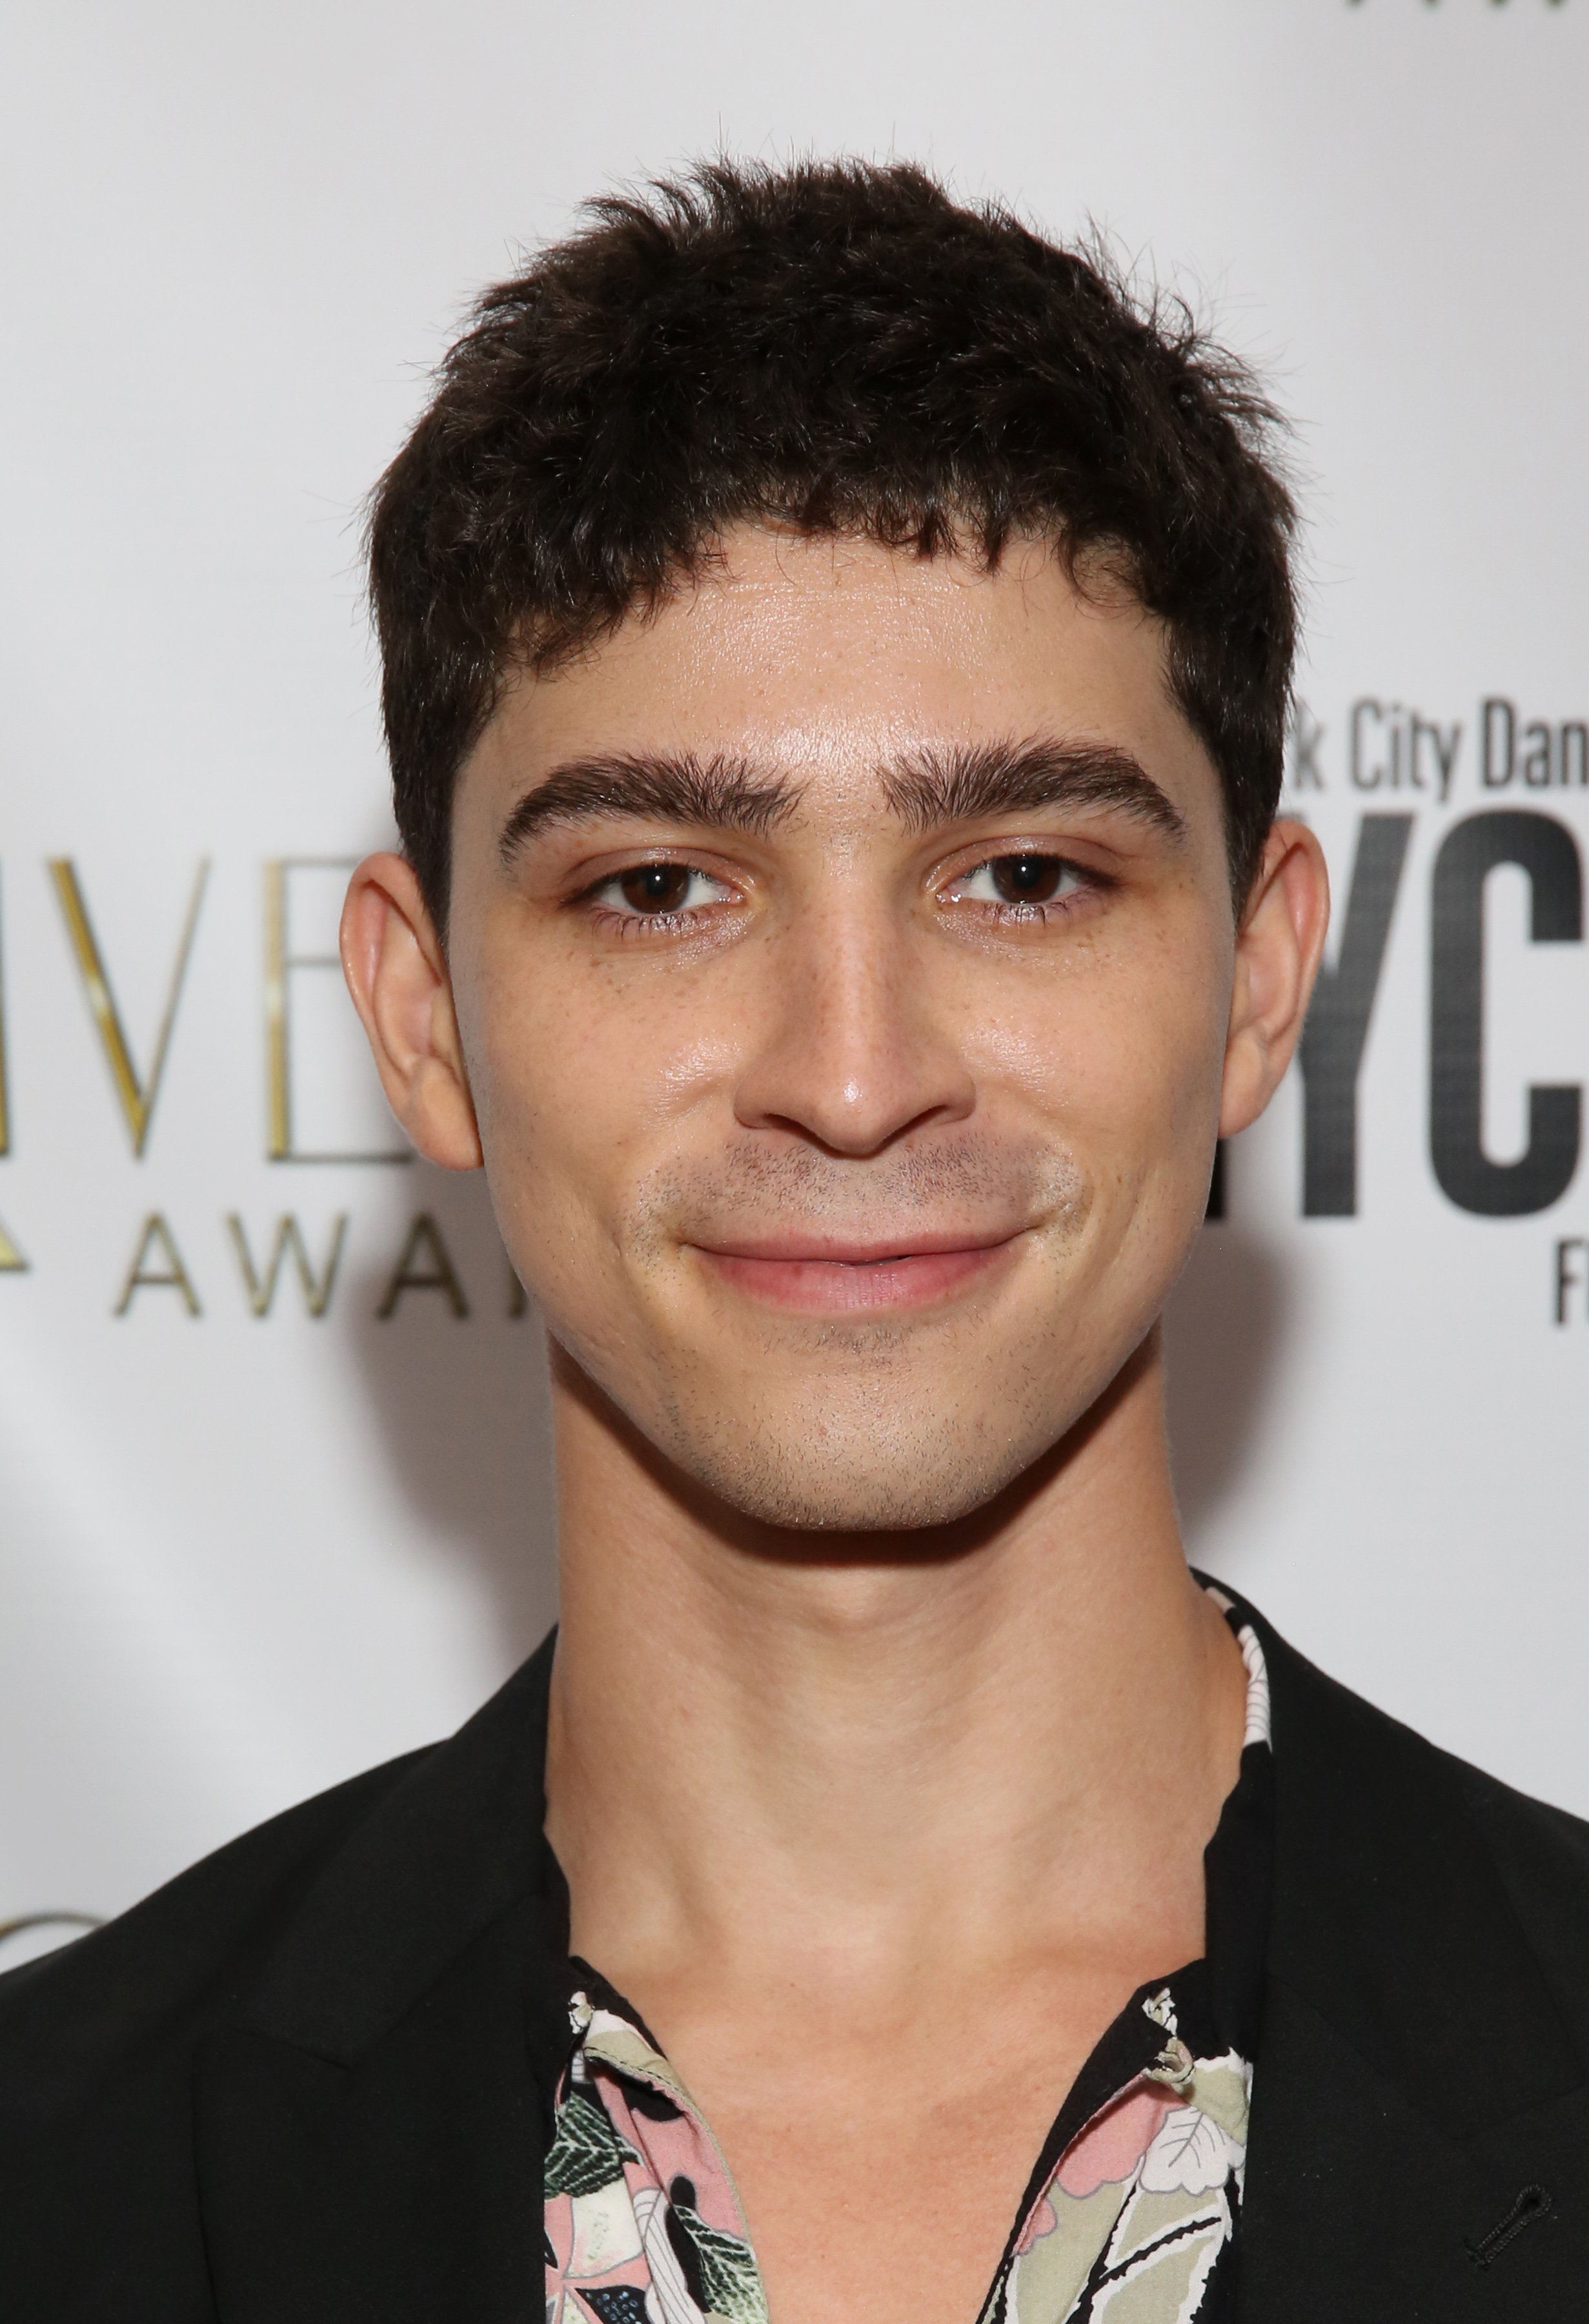 Isaac Powell attends the Chita Rivera Awards at NYU Skirball Center in 2019